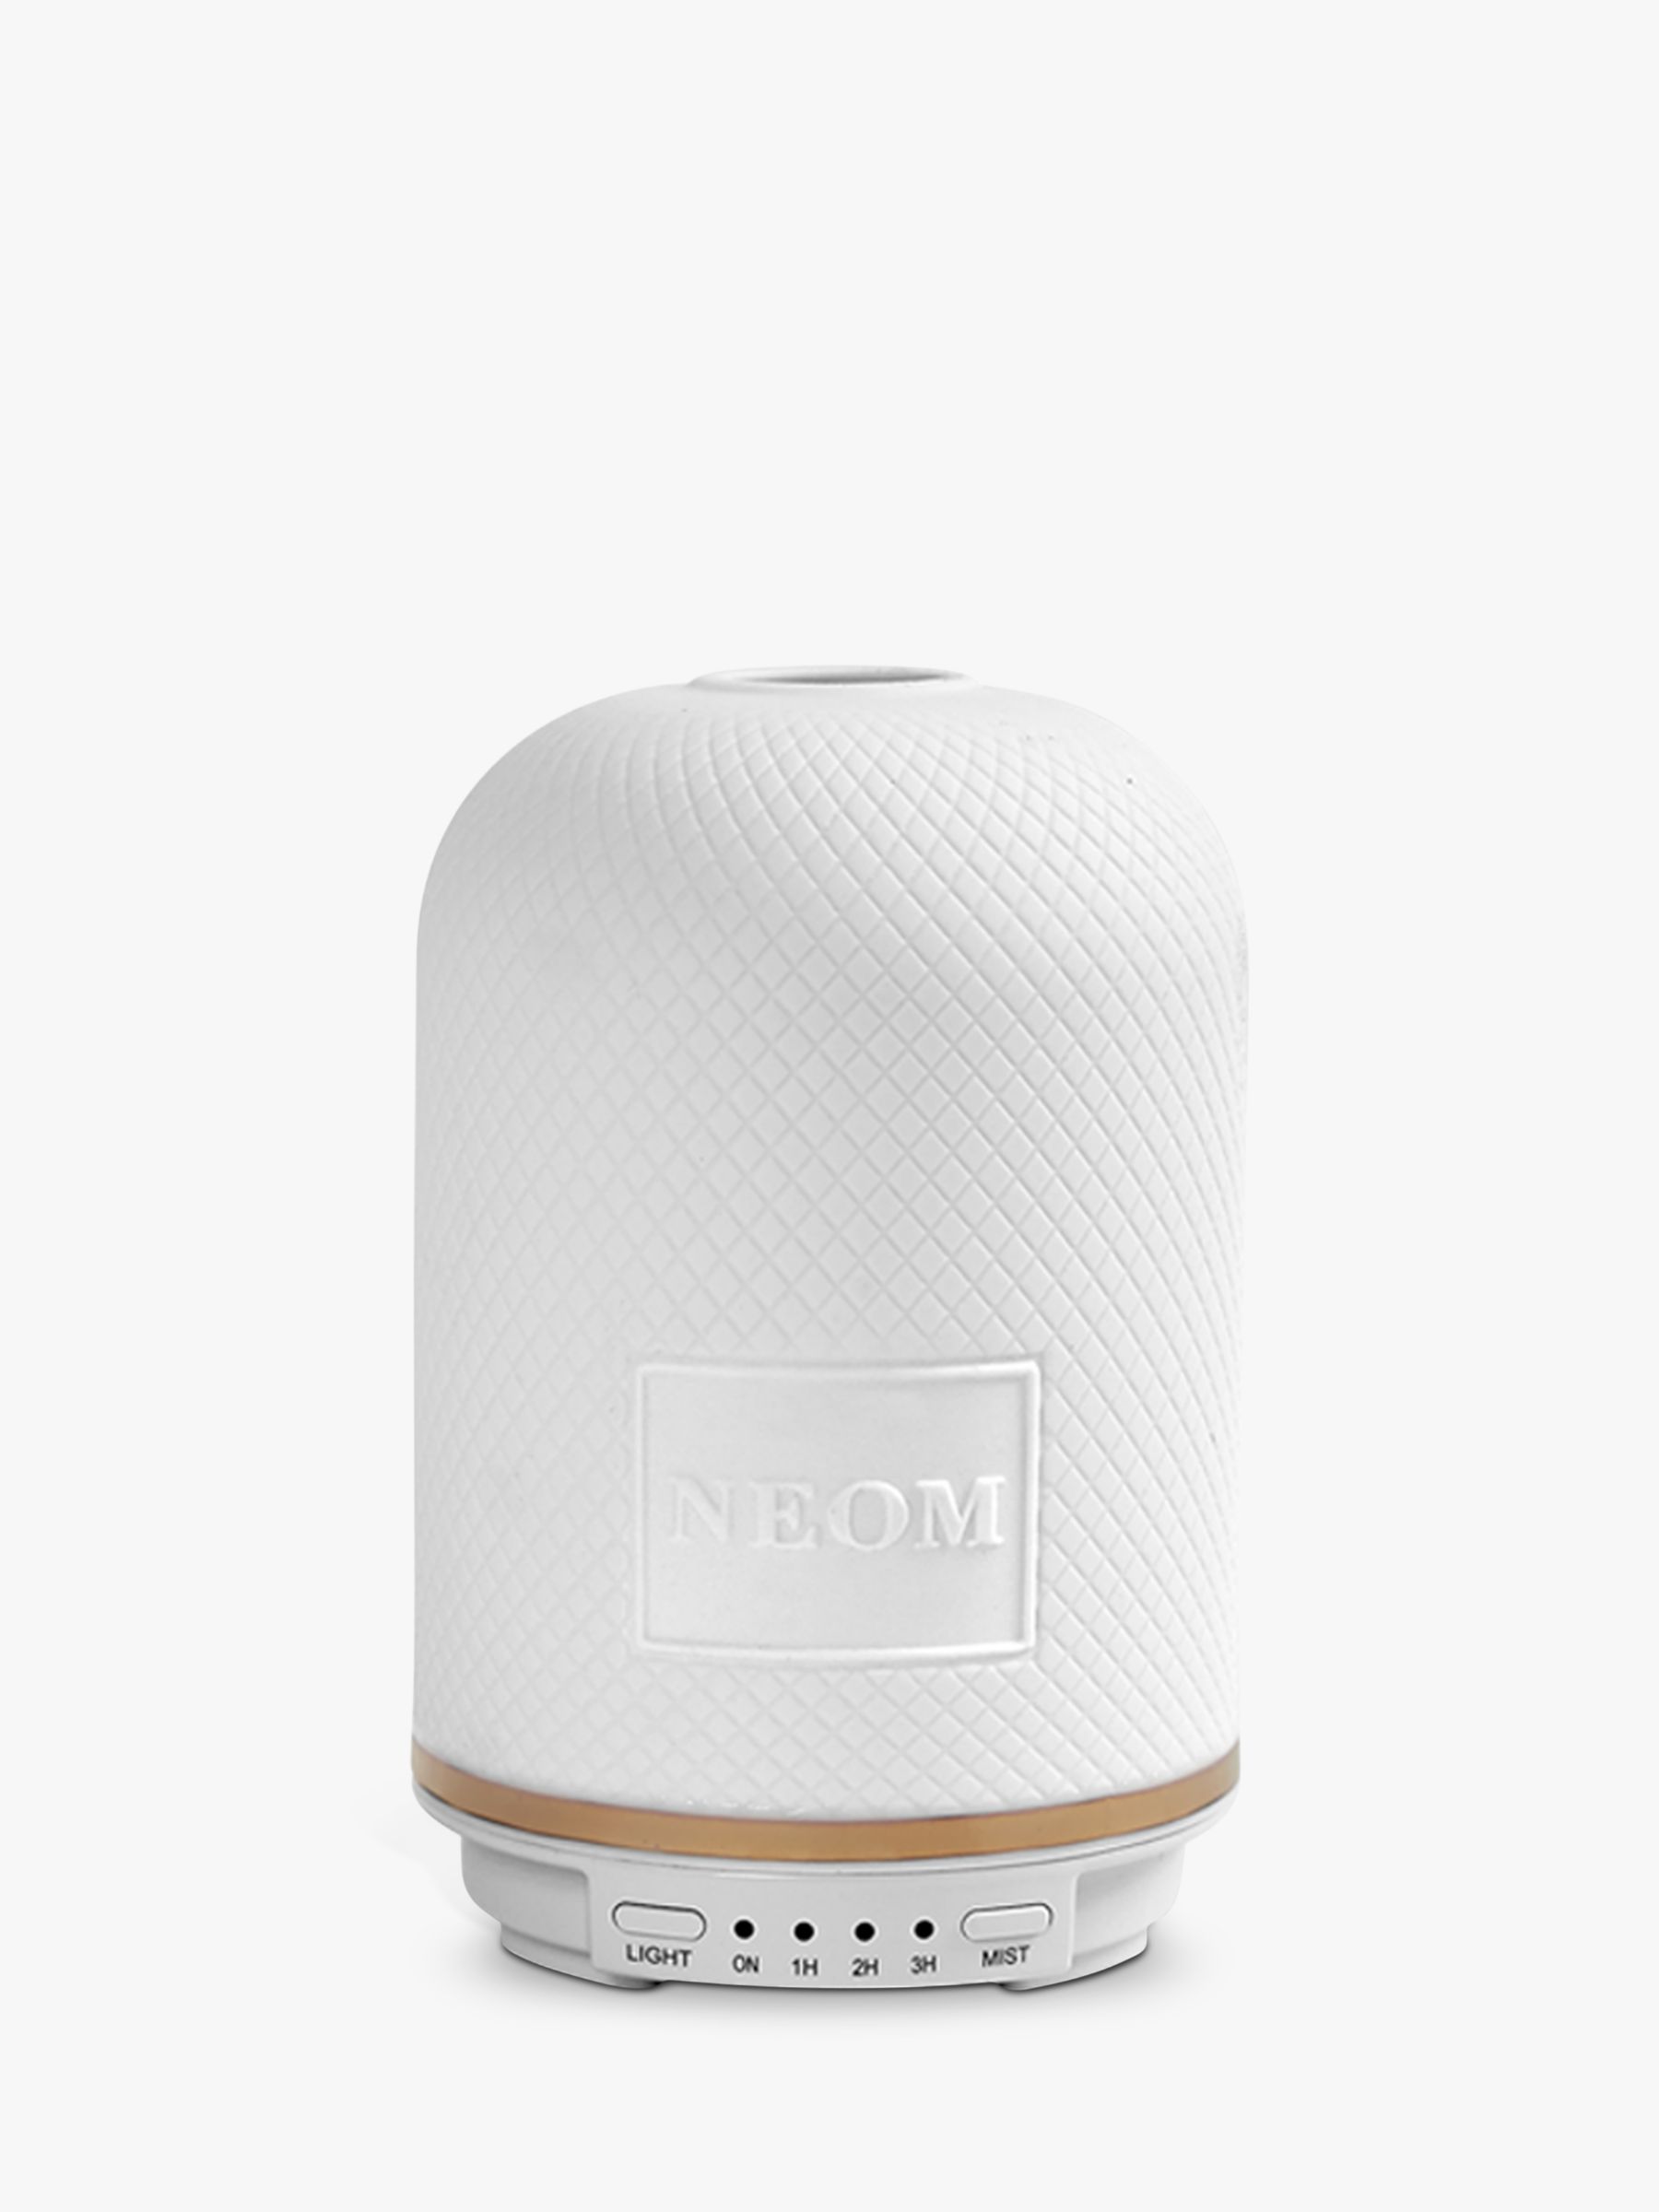 Neom Organics London Wellbeing Pod Diffuser & Scent to Sleep Essential Oil Blend, 10ml (bundle)